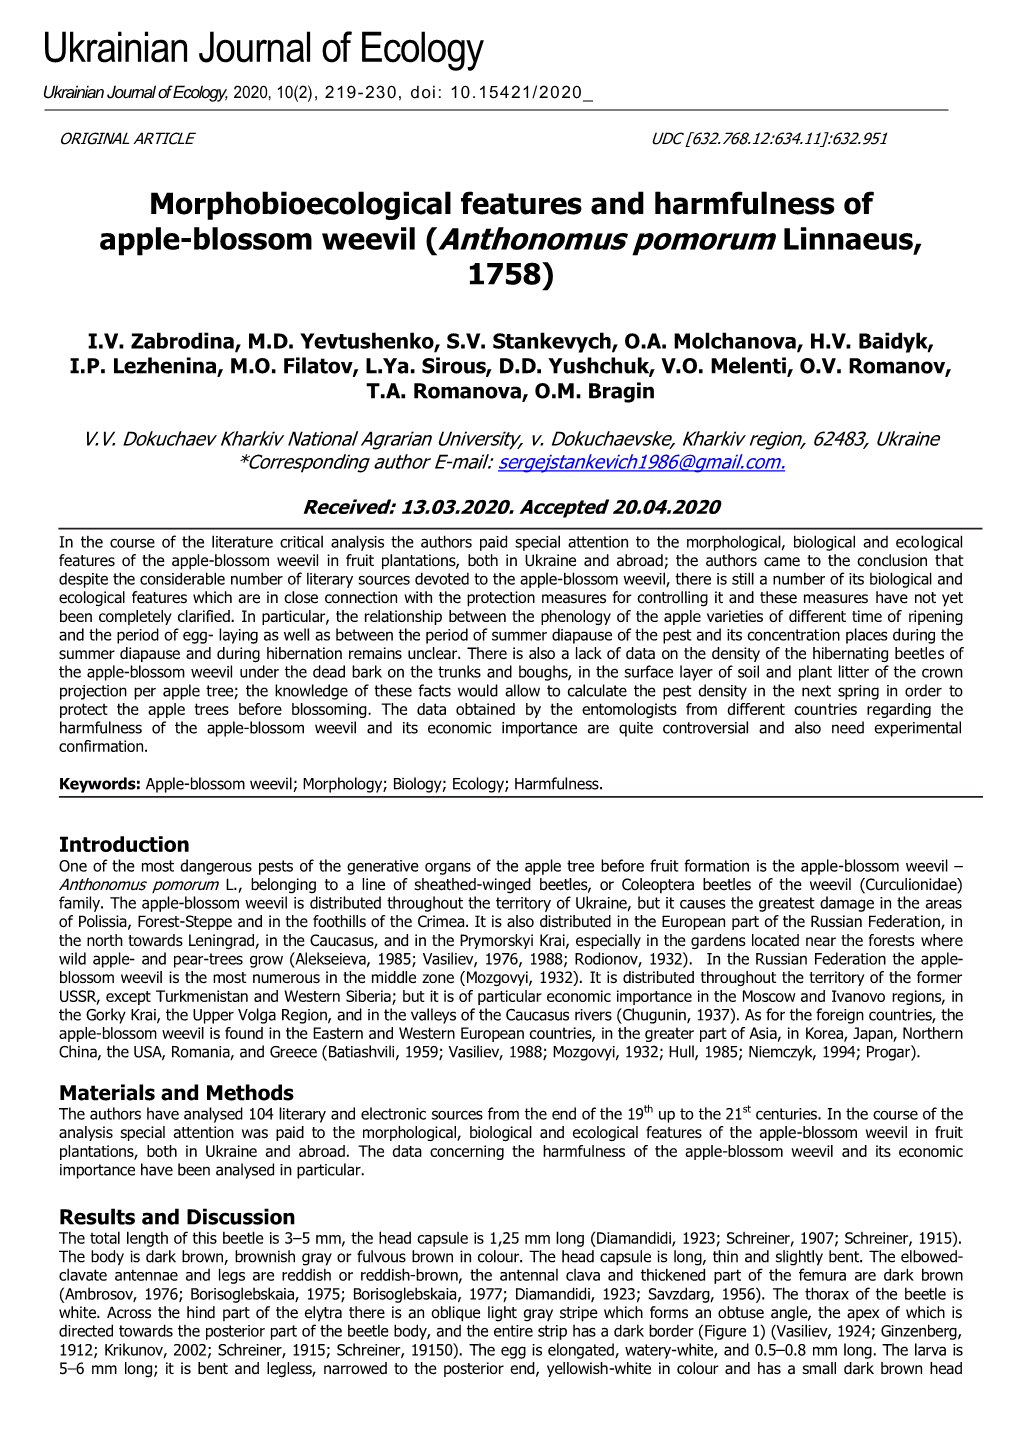 Morphobioecological Features and Harmfulness of Apple-Blossom Weevil (Anthonomus Pomorum Linnaeus, 1758)